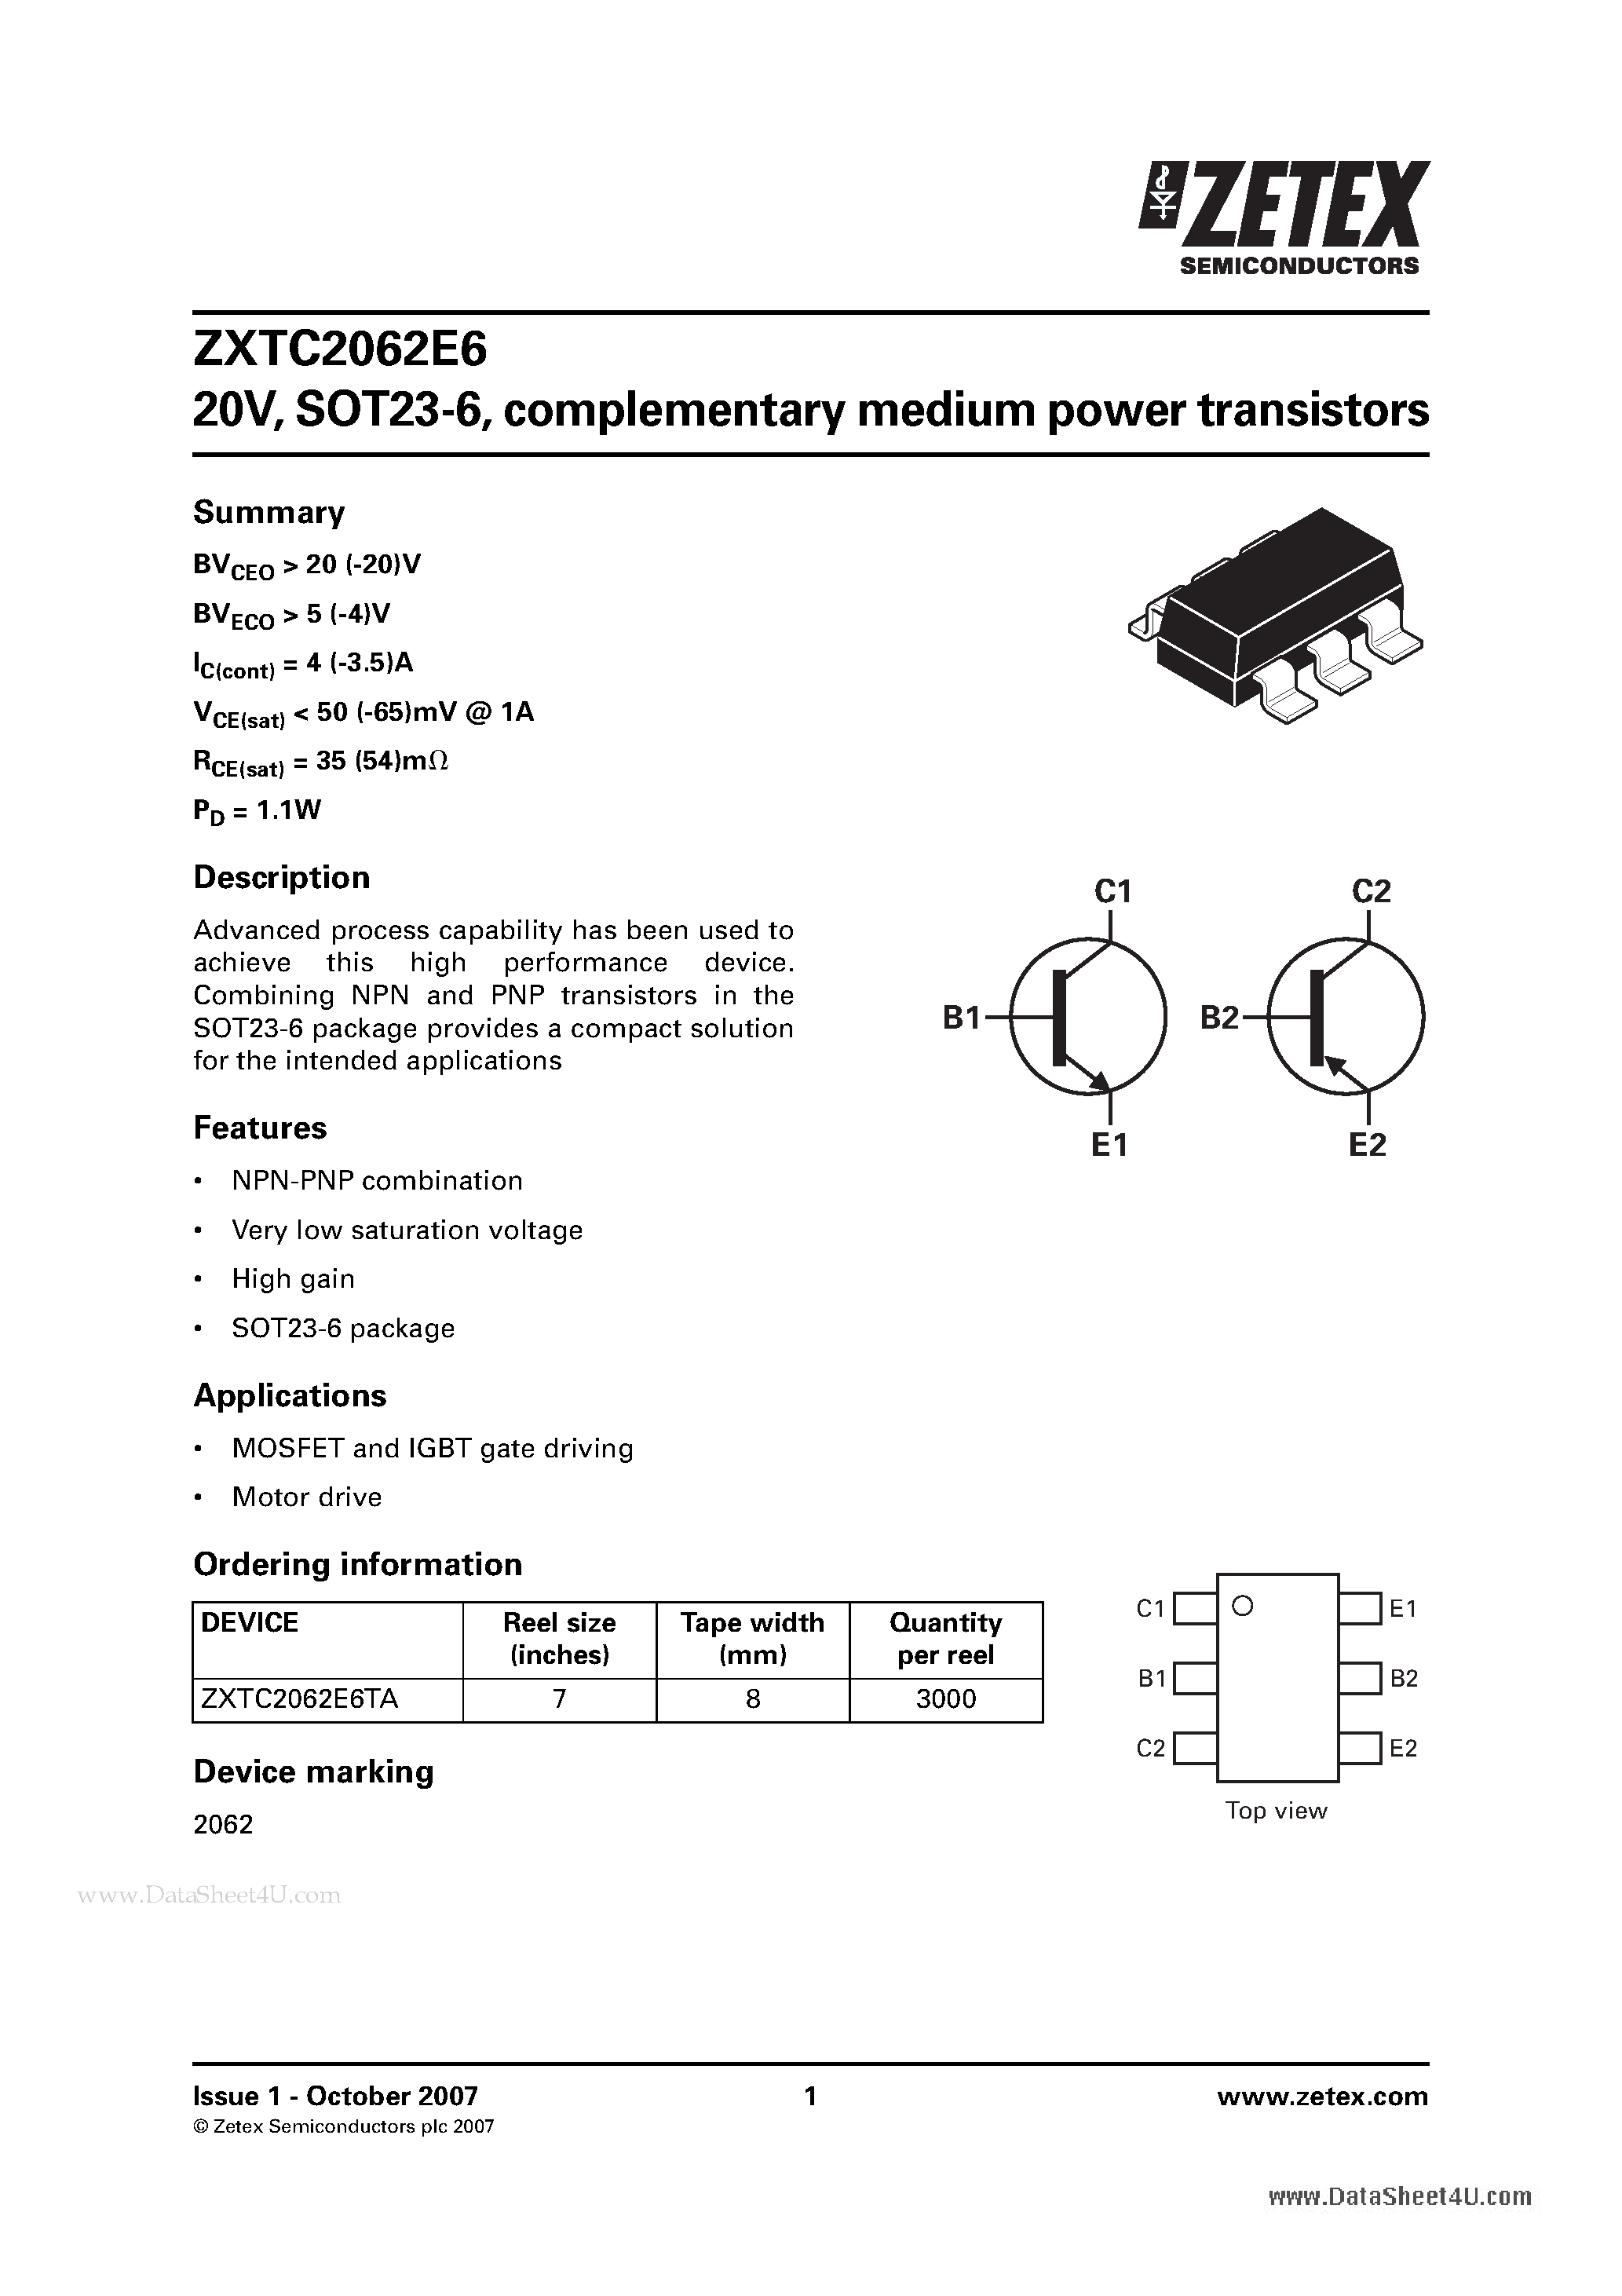 Datasheet ZXTC2062E6 - 20V SOT23-6 complementary medium power transistors page 1